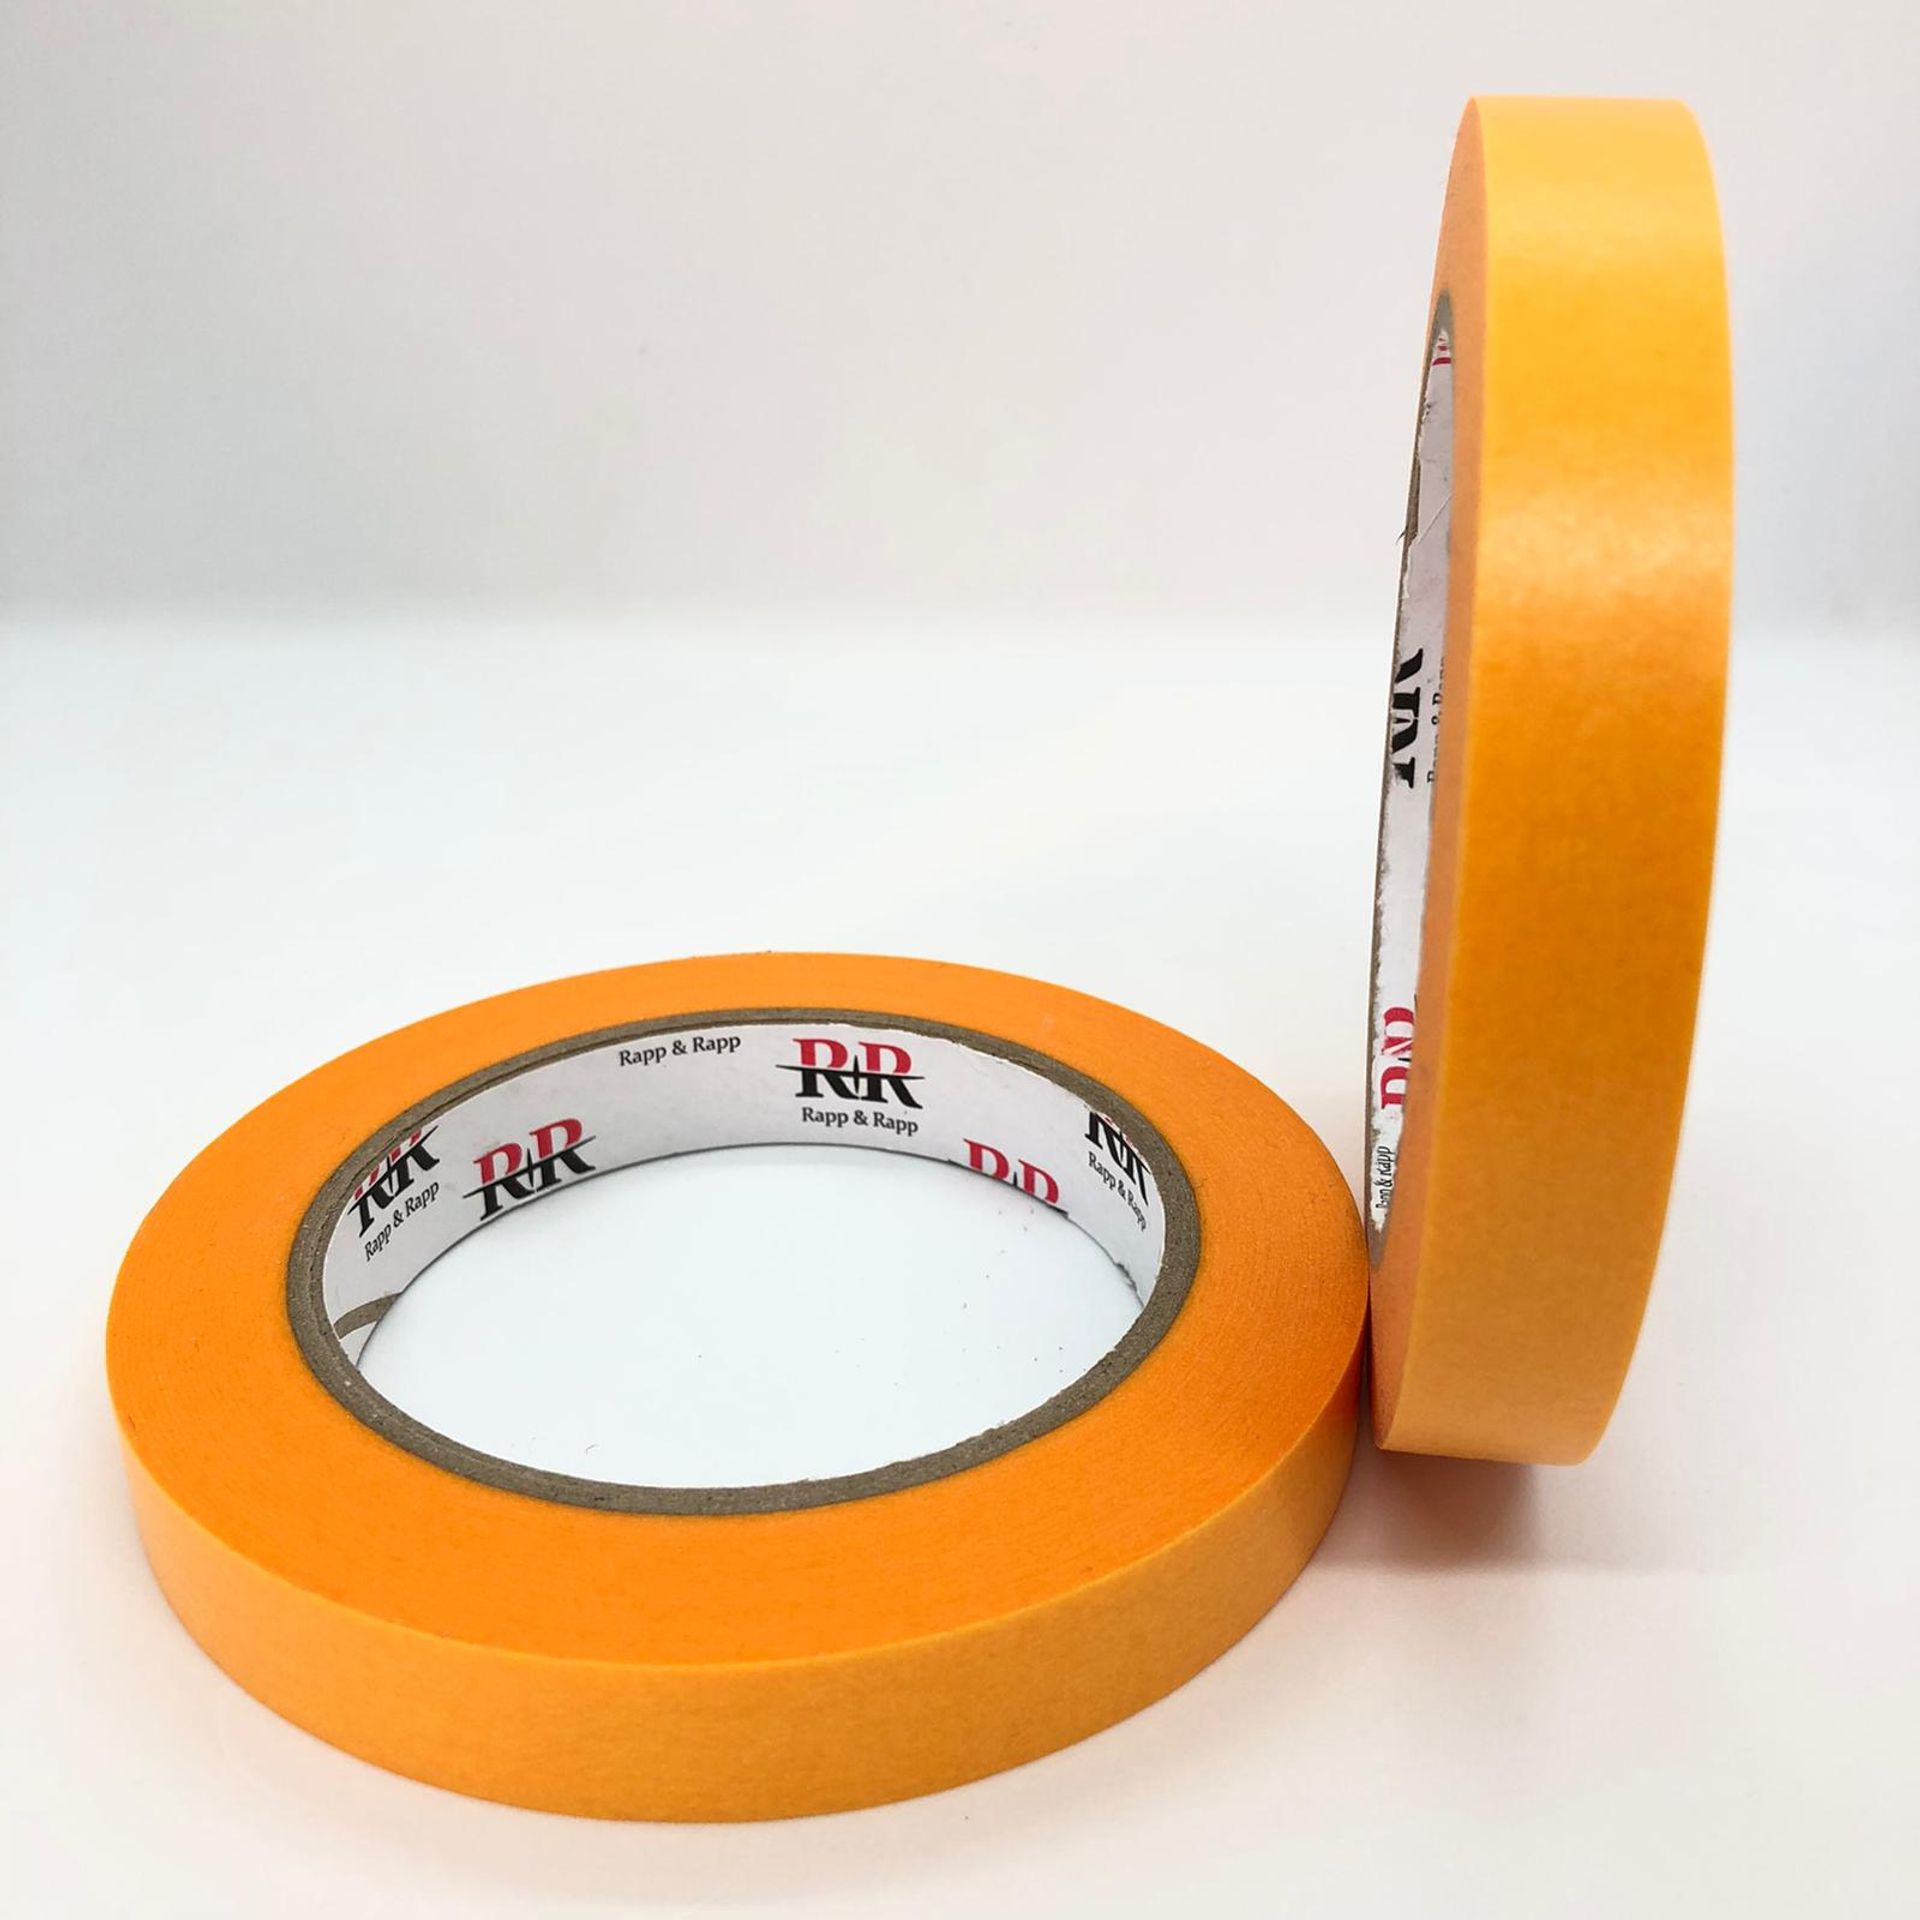 Washi Tape Abklebeband Gold Profi, extra dünn Maße: 25 mm x 50 m kaufen  Maße: 25 mm x 50 m